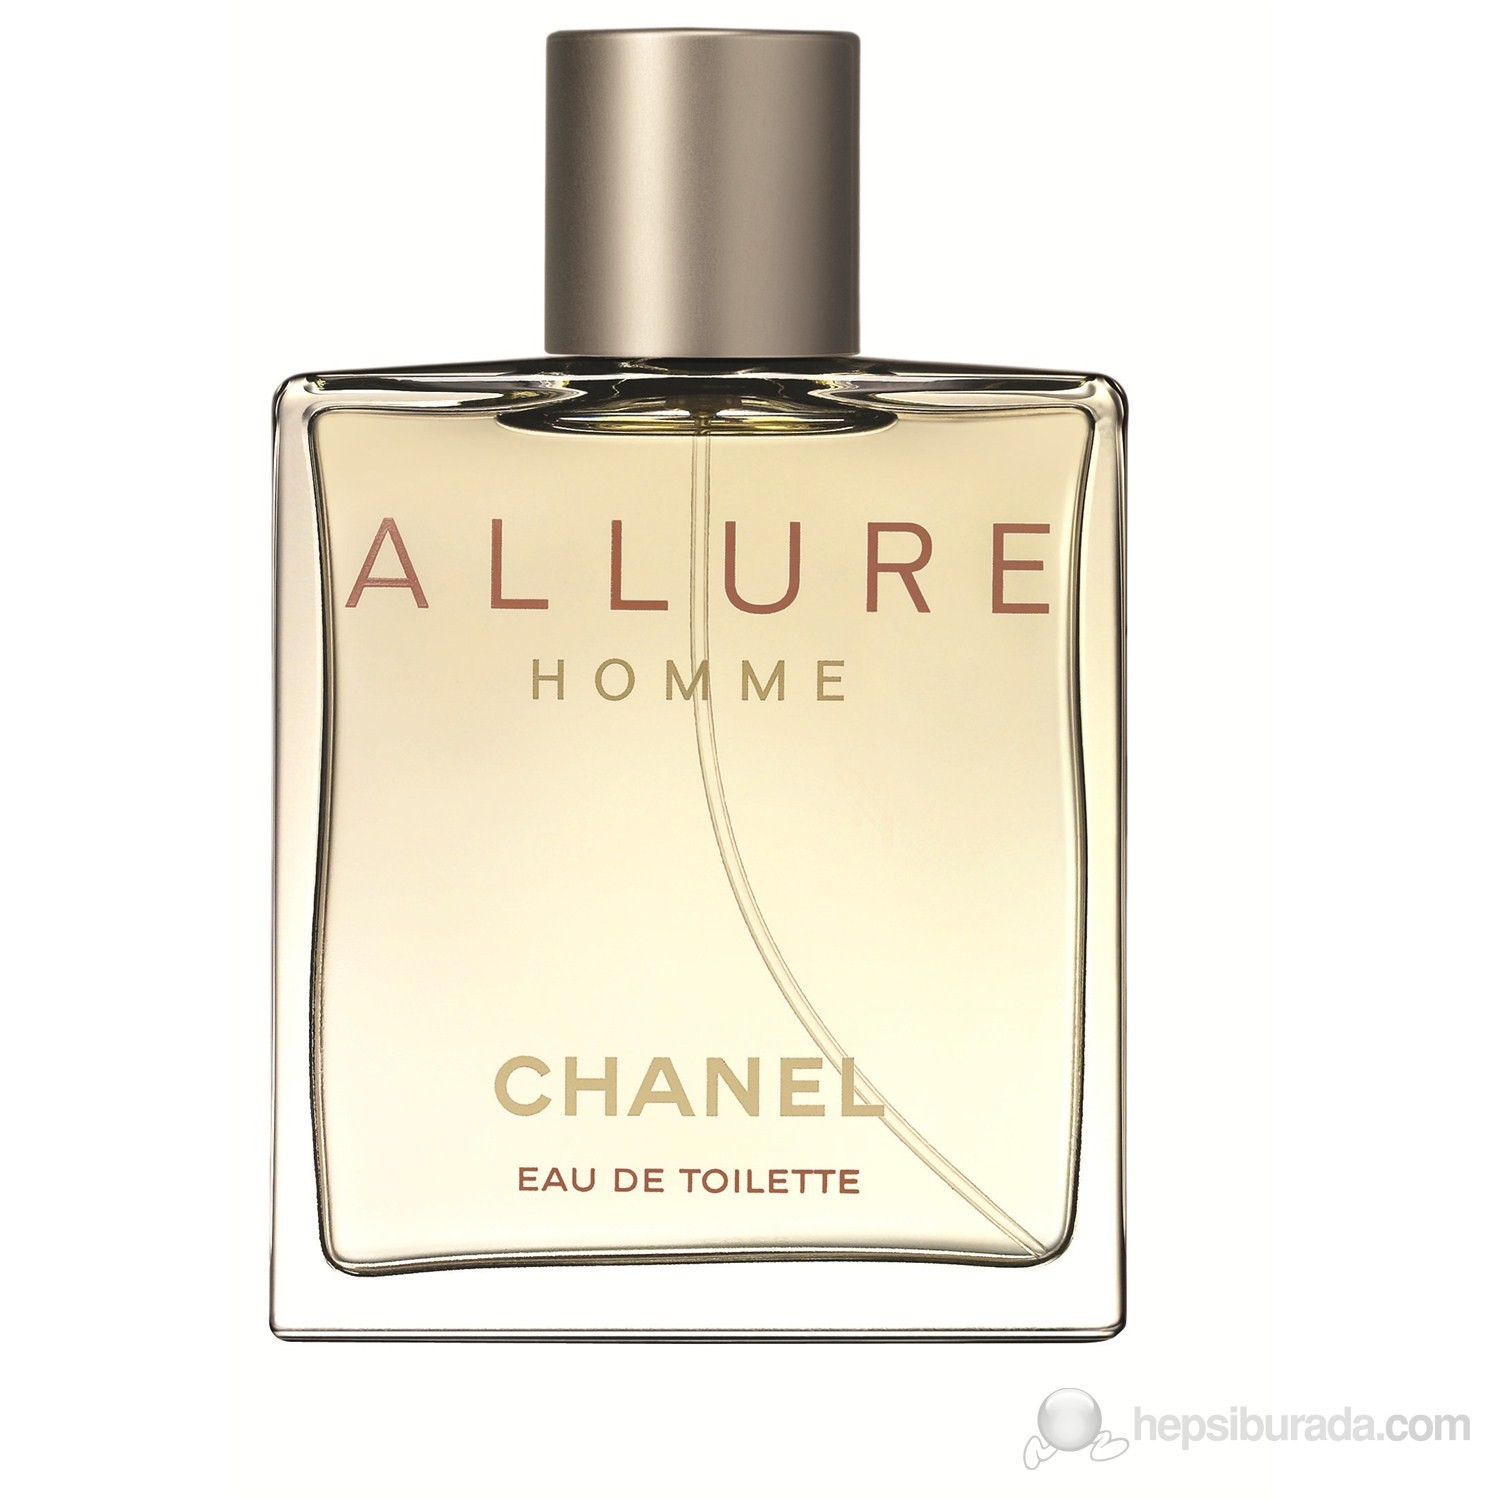 Chanel allure homme цена. Мужские духи Шанель Аллюр. Chanel Allure EDT. Шанель Allure homme. Туалетная вода Chanel Allure homme.